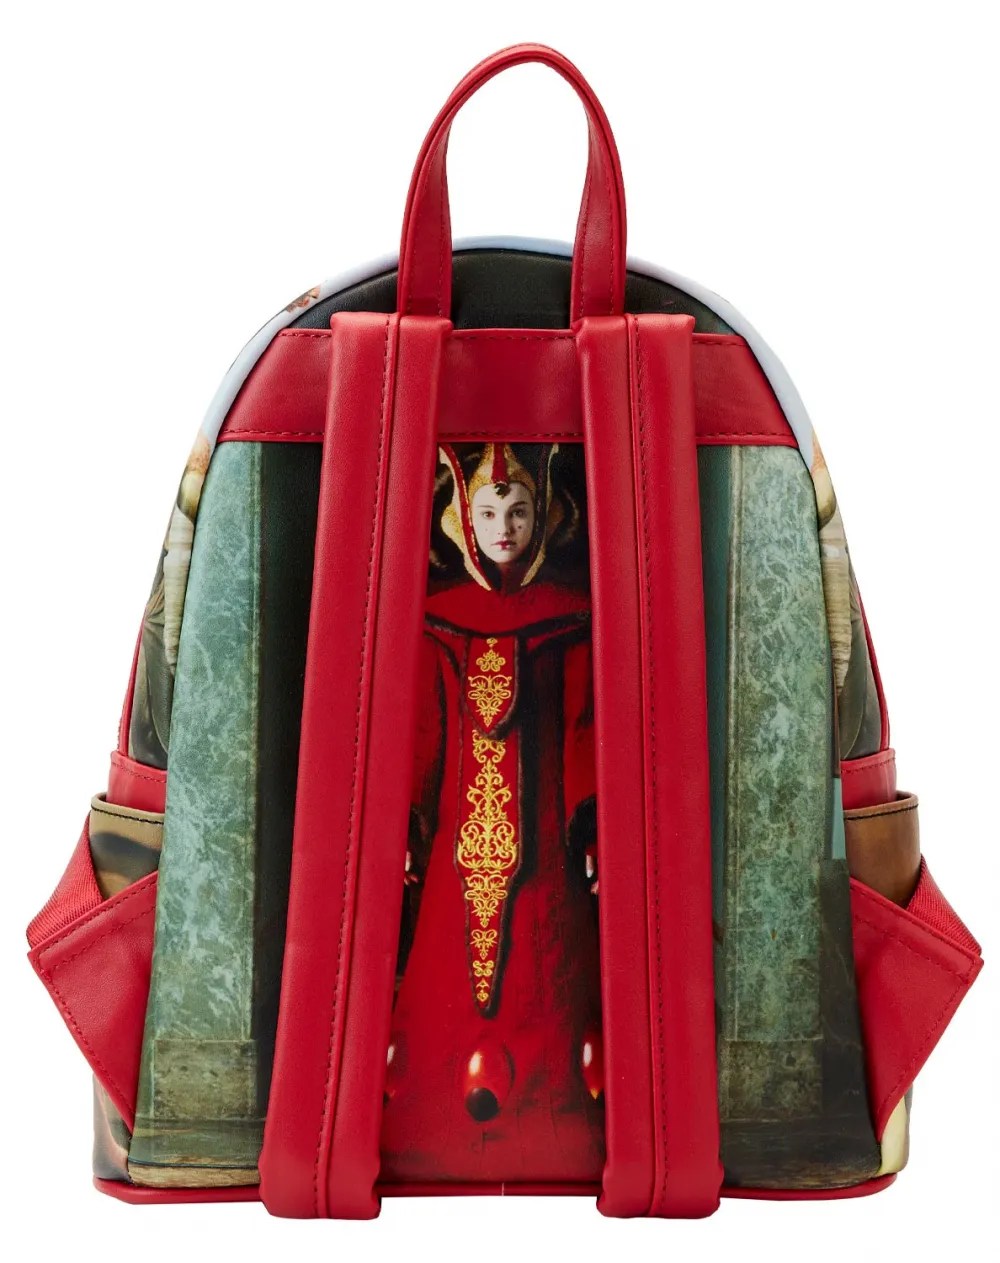 Star Wars : The Phantom Menace Final Frames Mini Backpack Loungefly